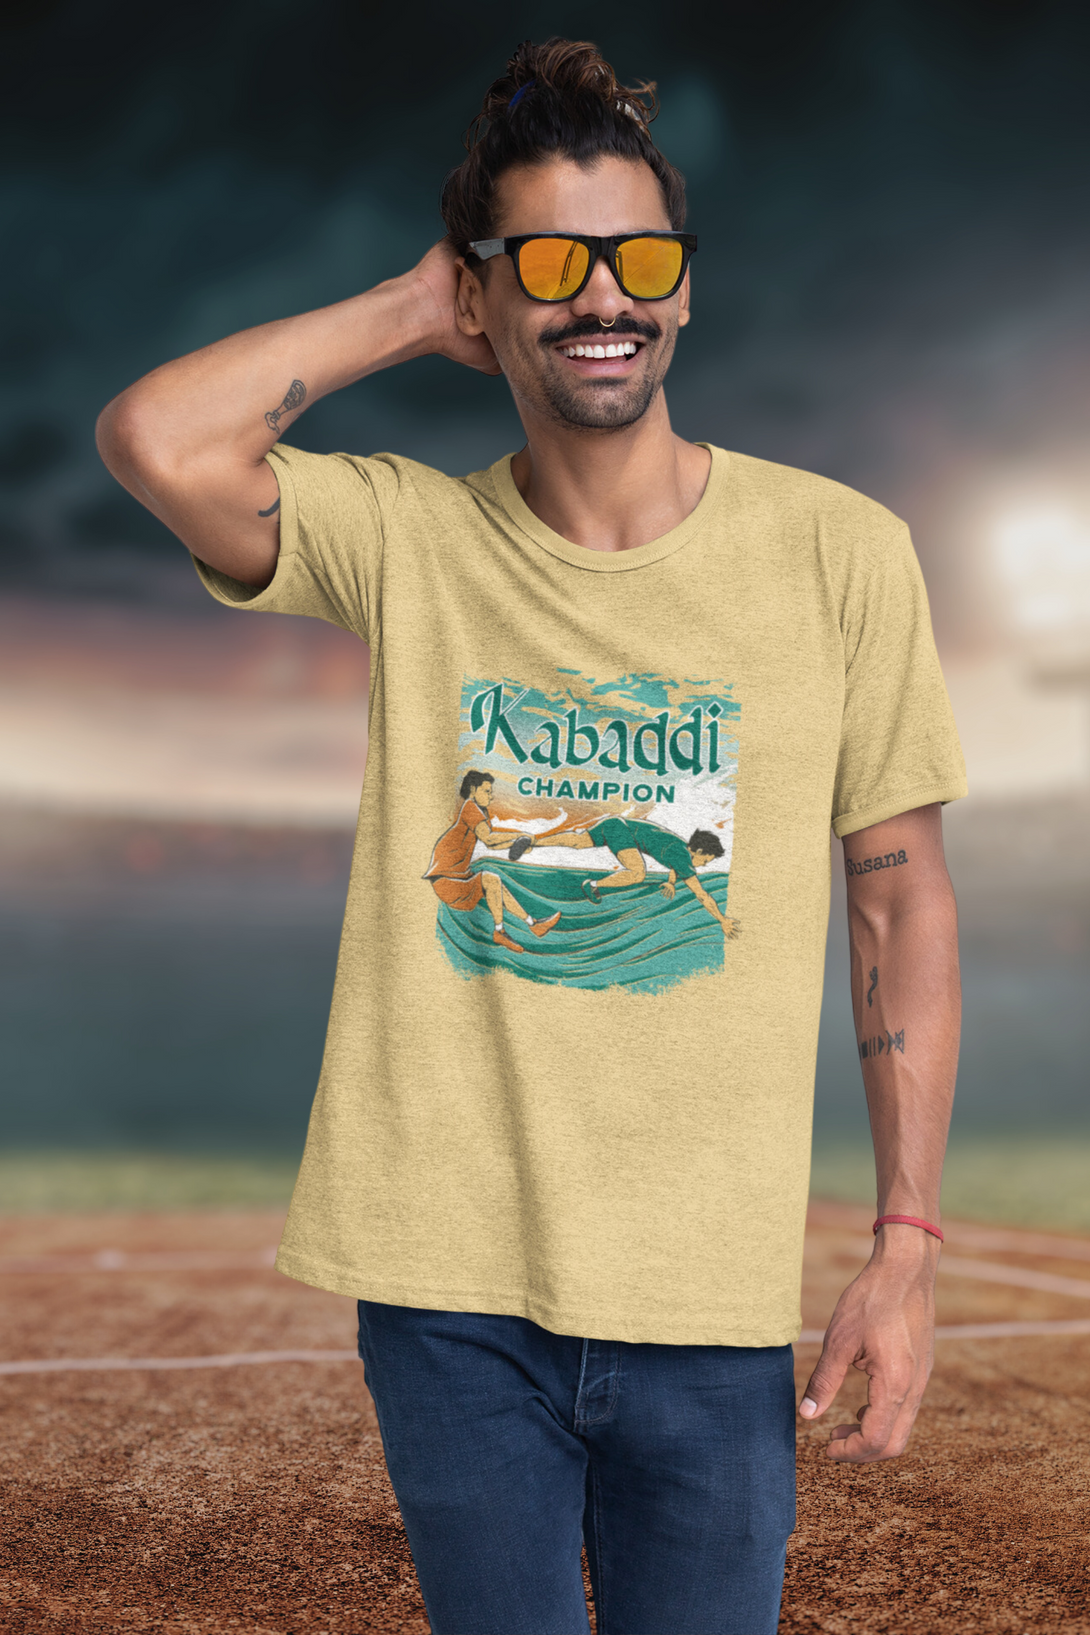 Kabaddi Champion Printed T-Shirt For Men - WowWaves - 5